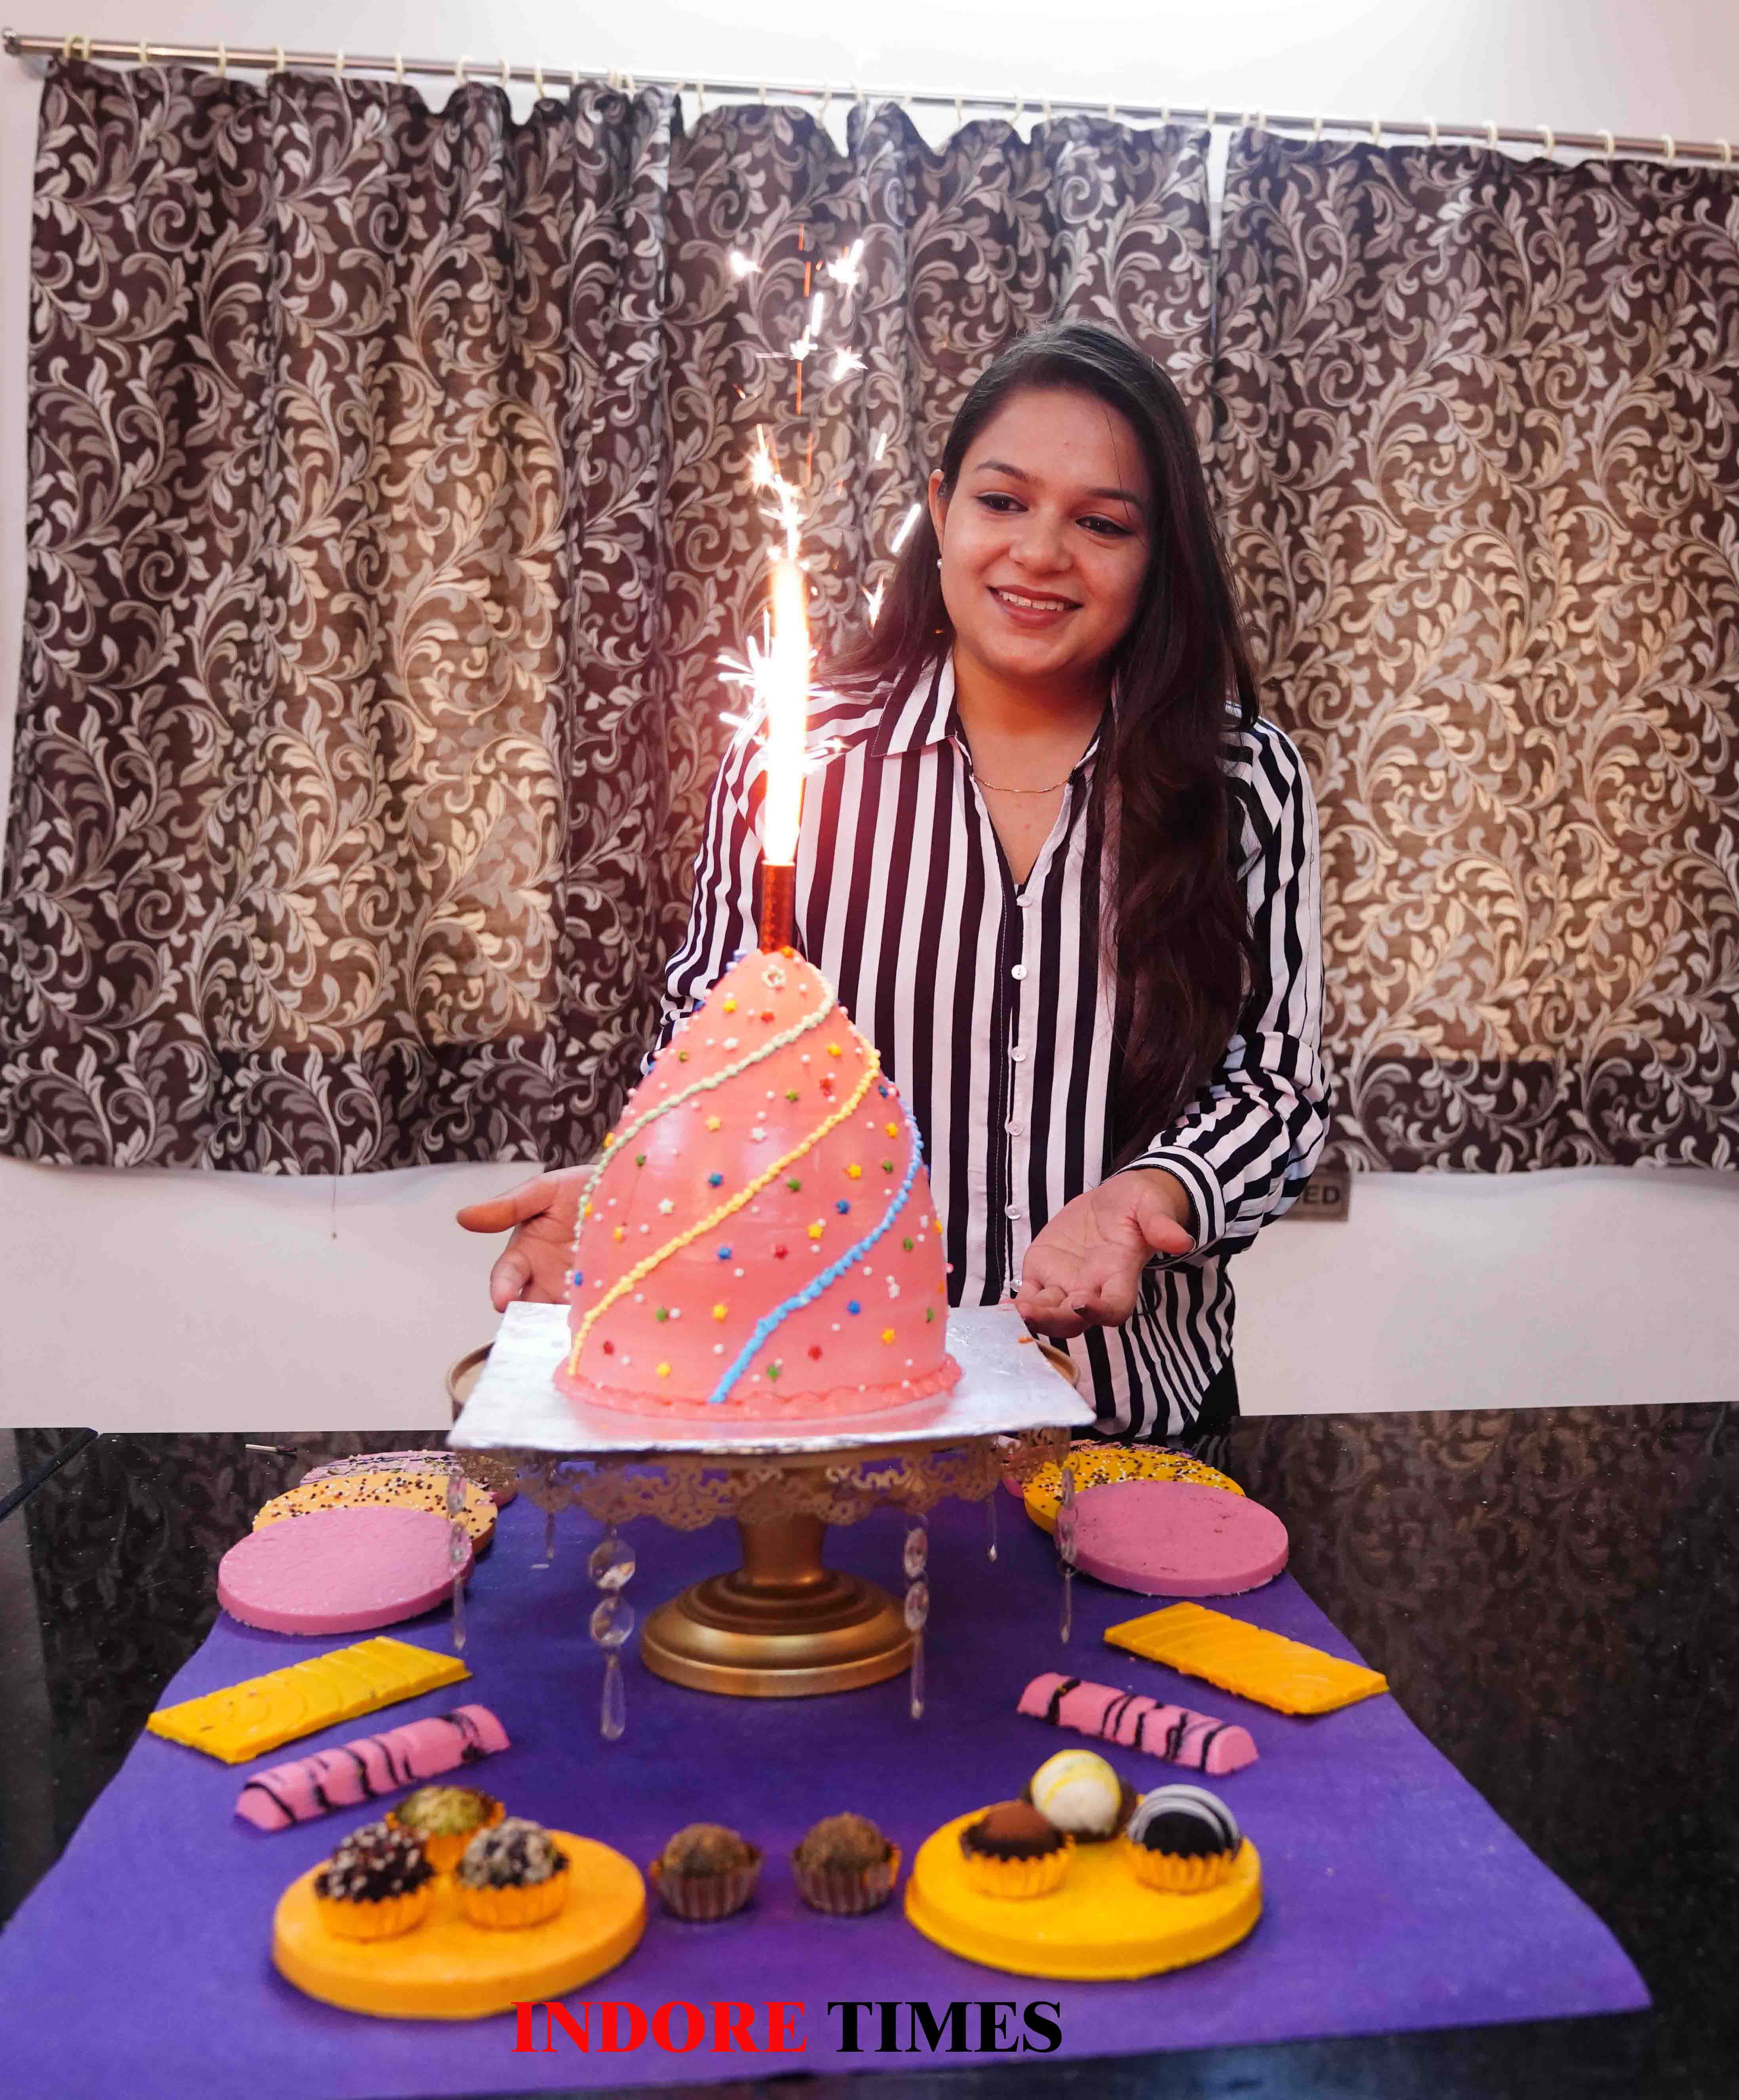 Happy Diwali Cake | Order Online | Oh My Cake!